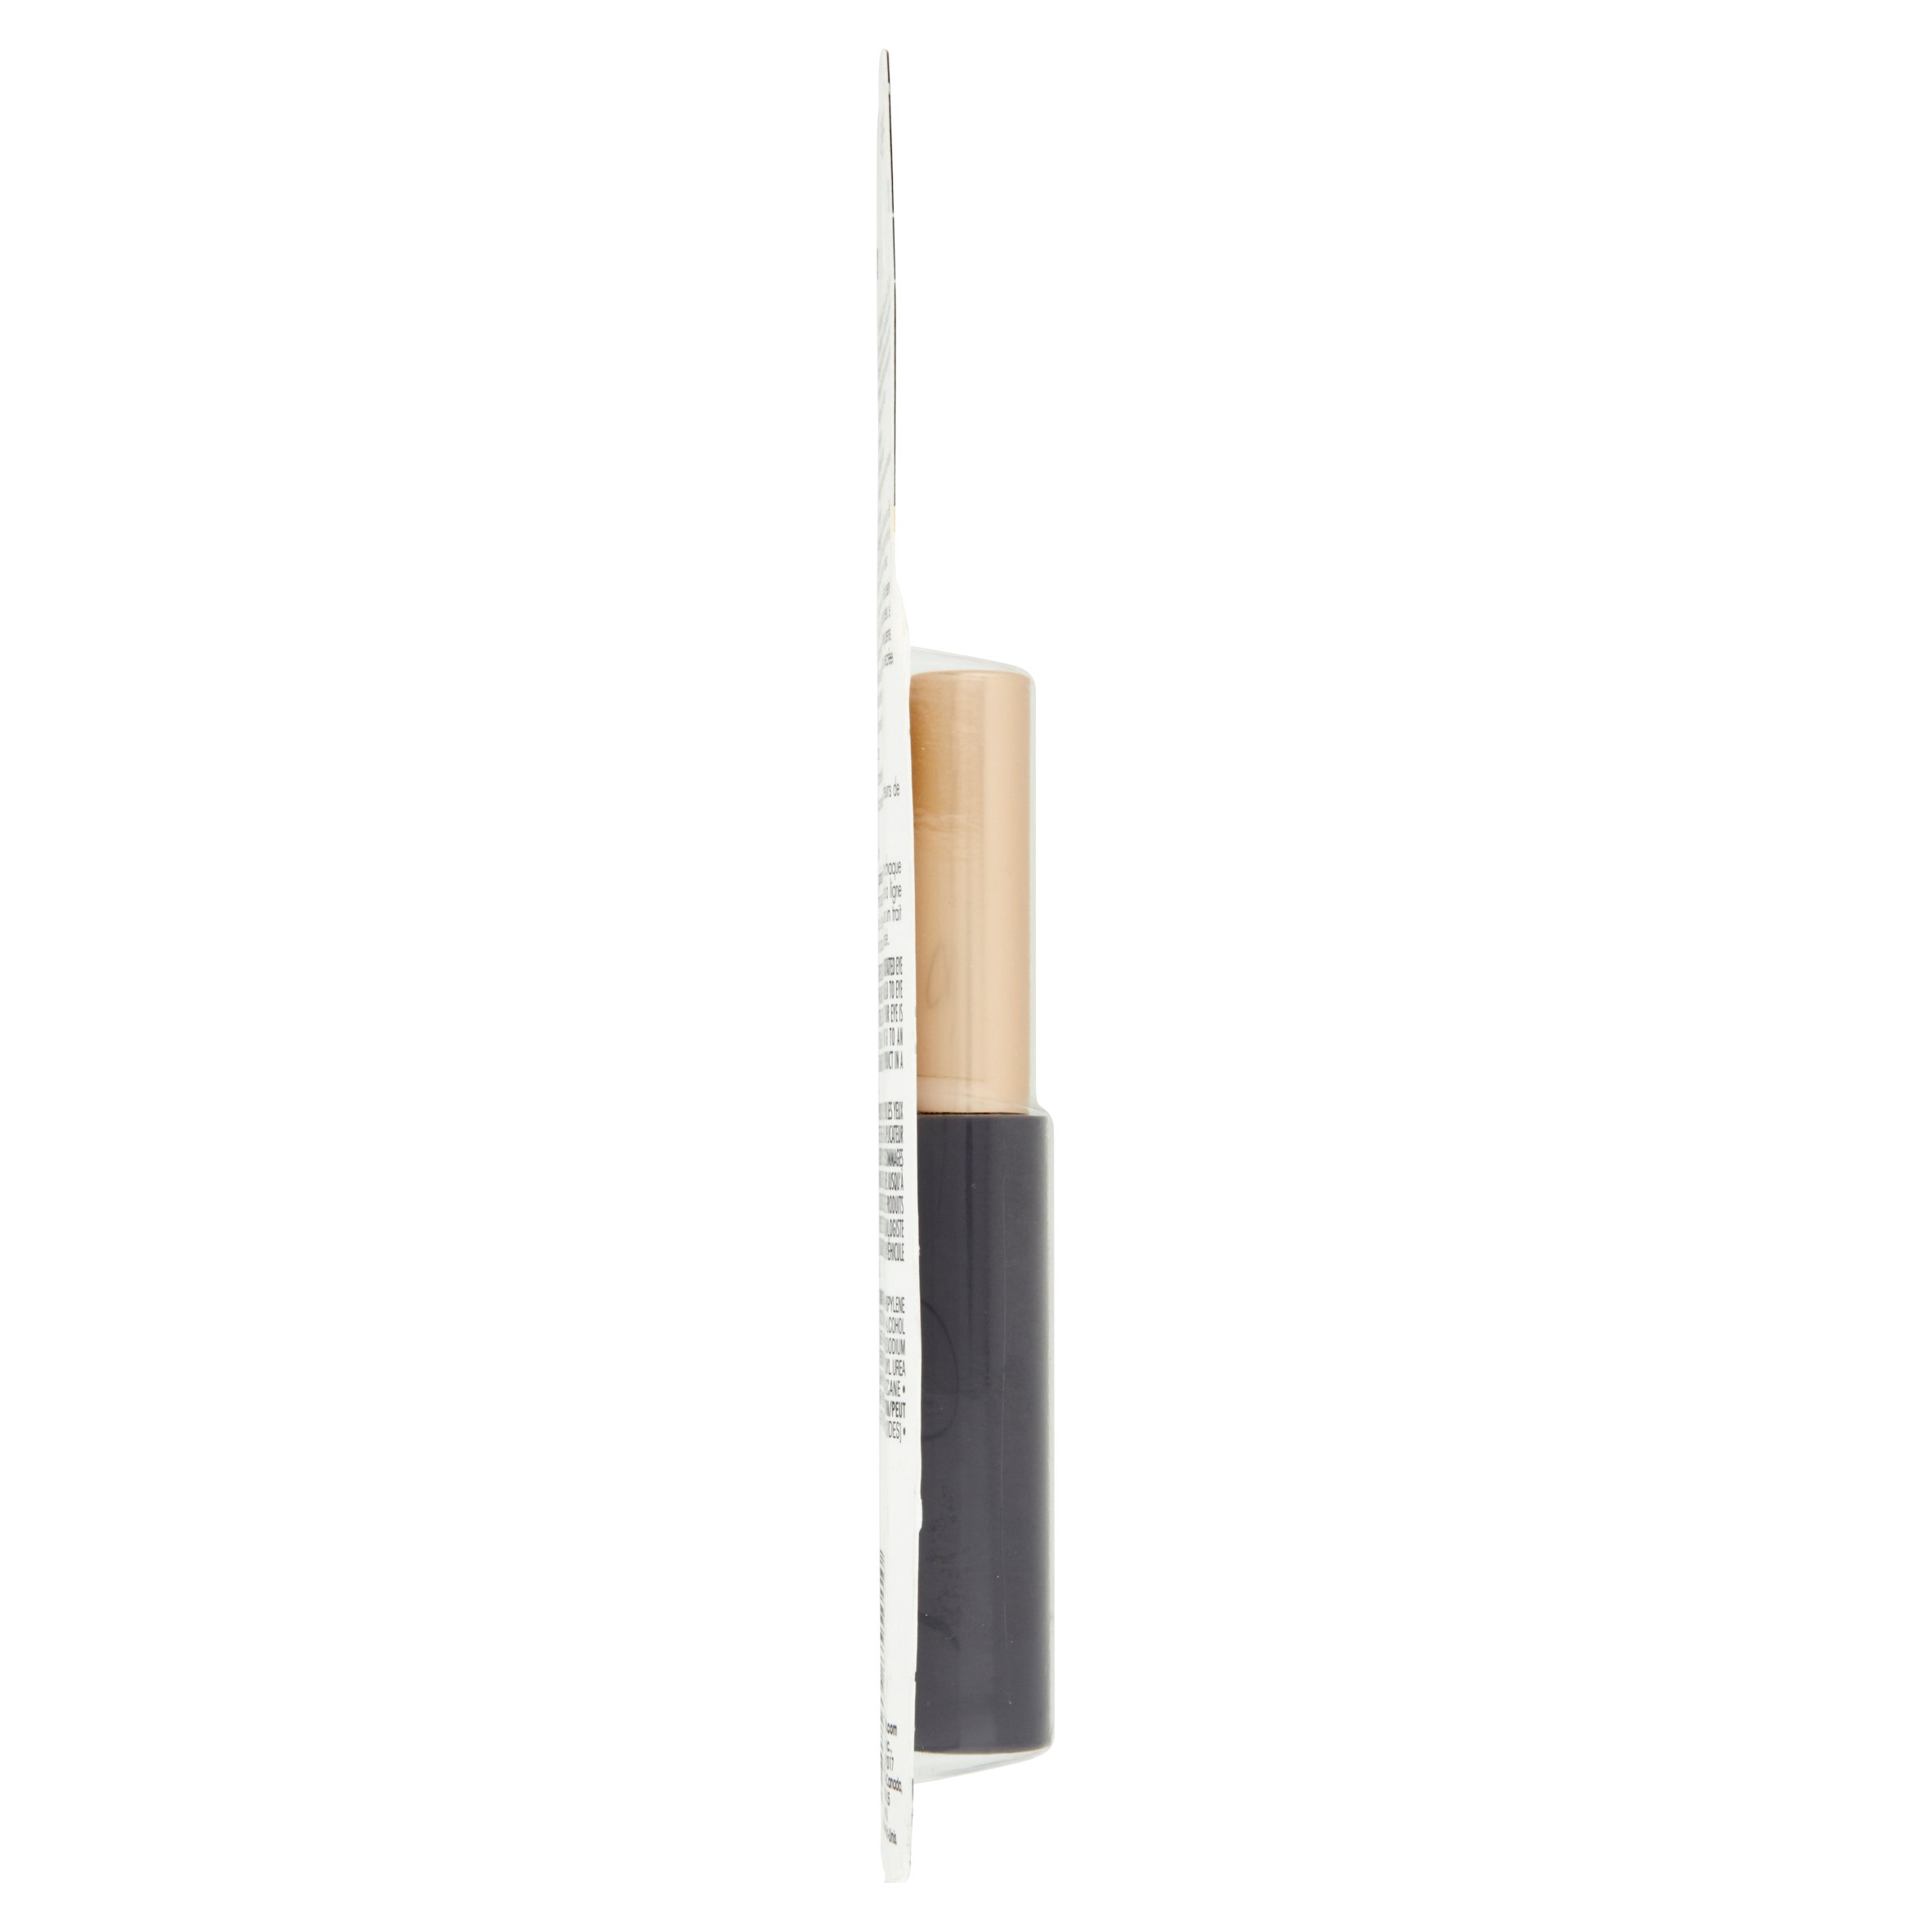 L'Oreal Paris Lineur Intense Brush Tip Liquid Eyeliner, Black - image 3 of 6